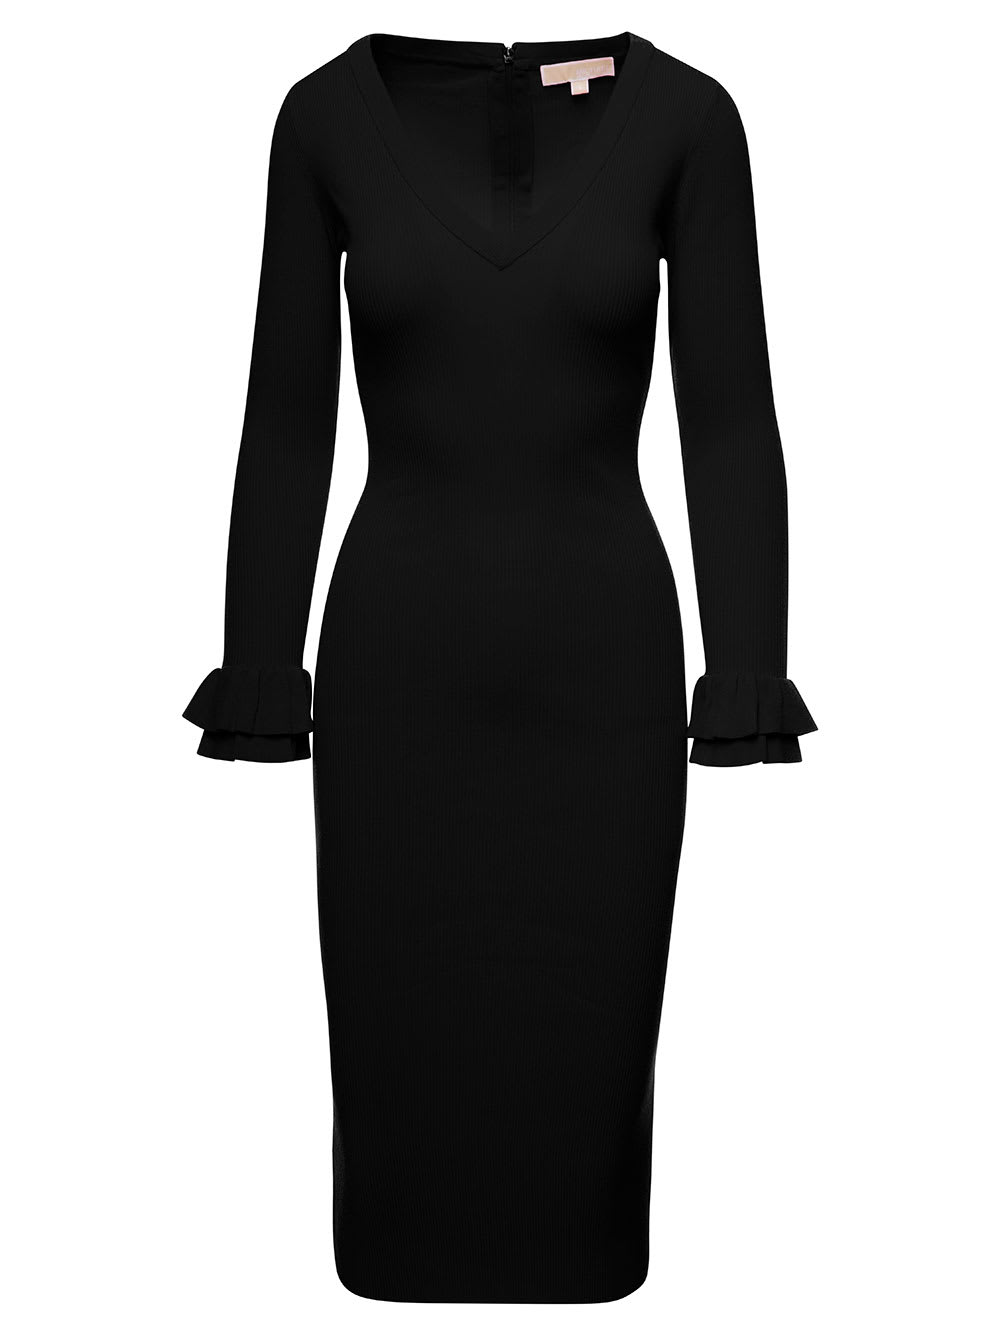 Michael Kors  Dresses  Dress Sale Michael Kors Evening Dress In Black   Poshmark